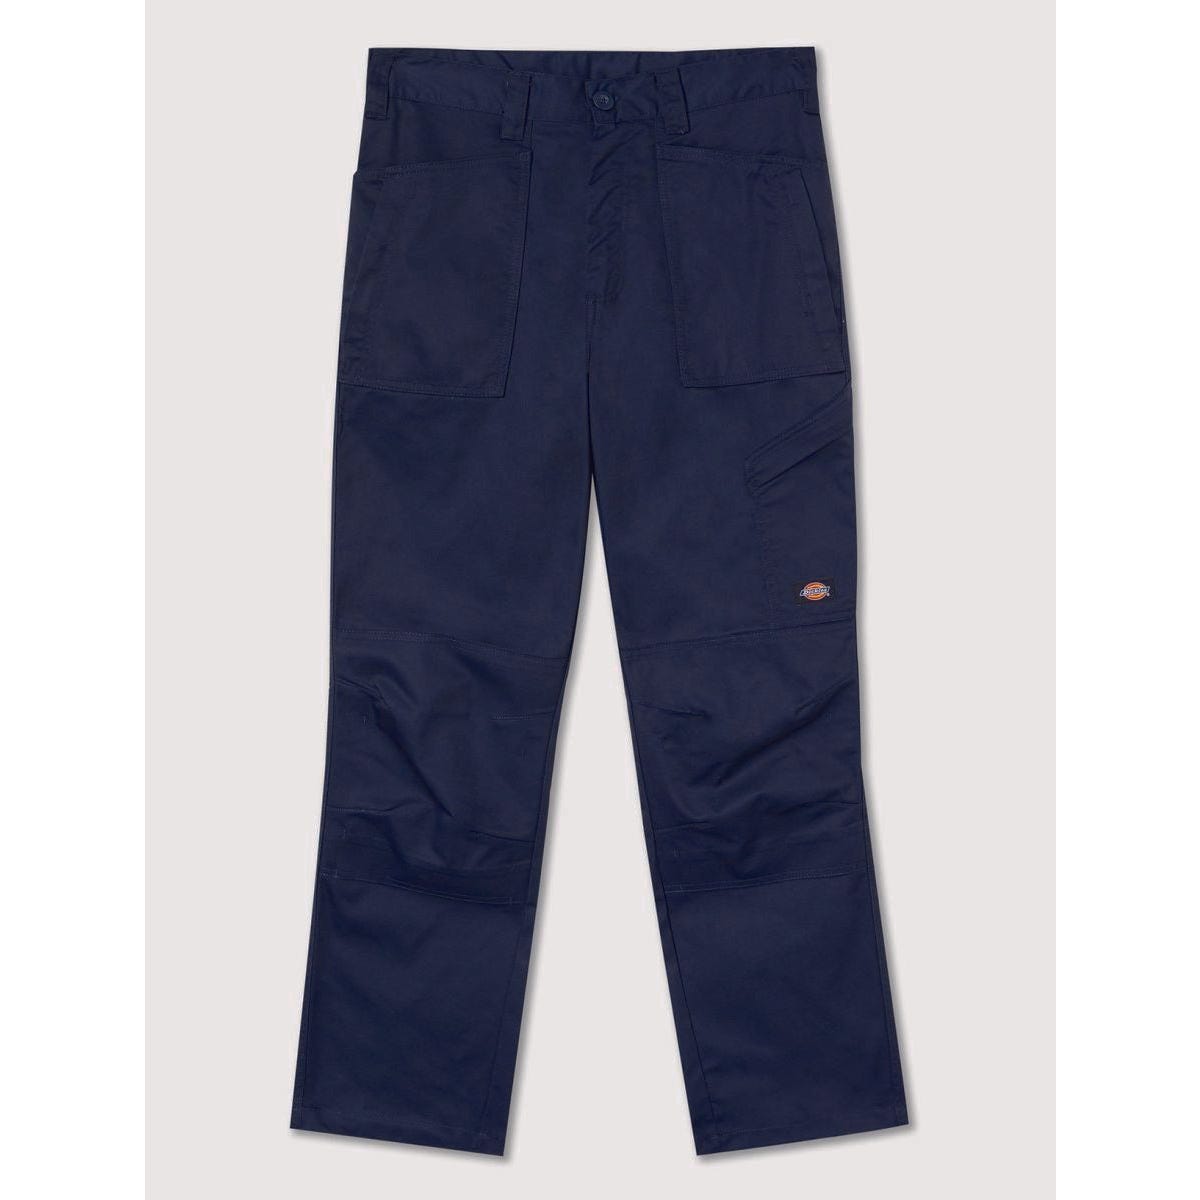 Pantalon de travail Action Flex bleu marine - Dickies - Taille 46 5